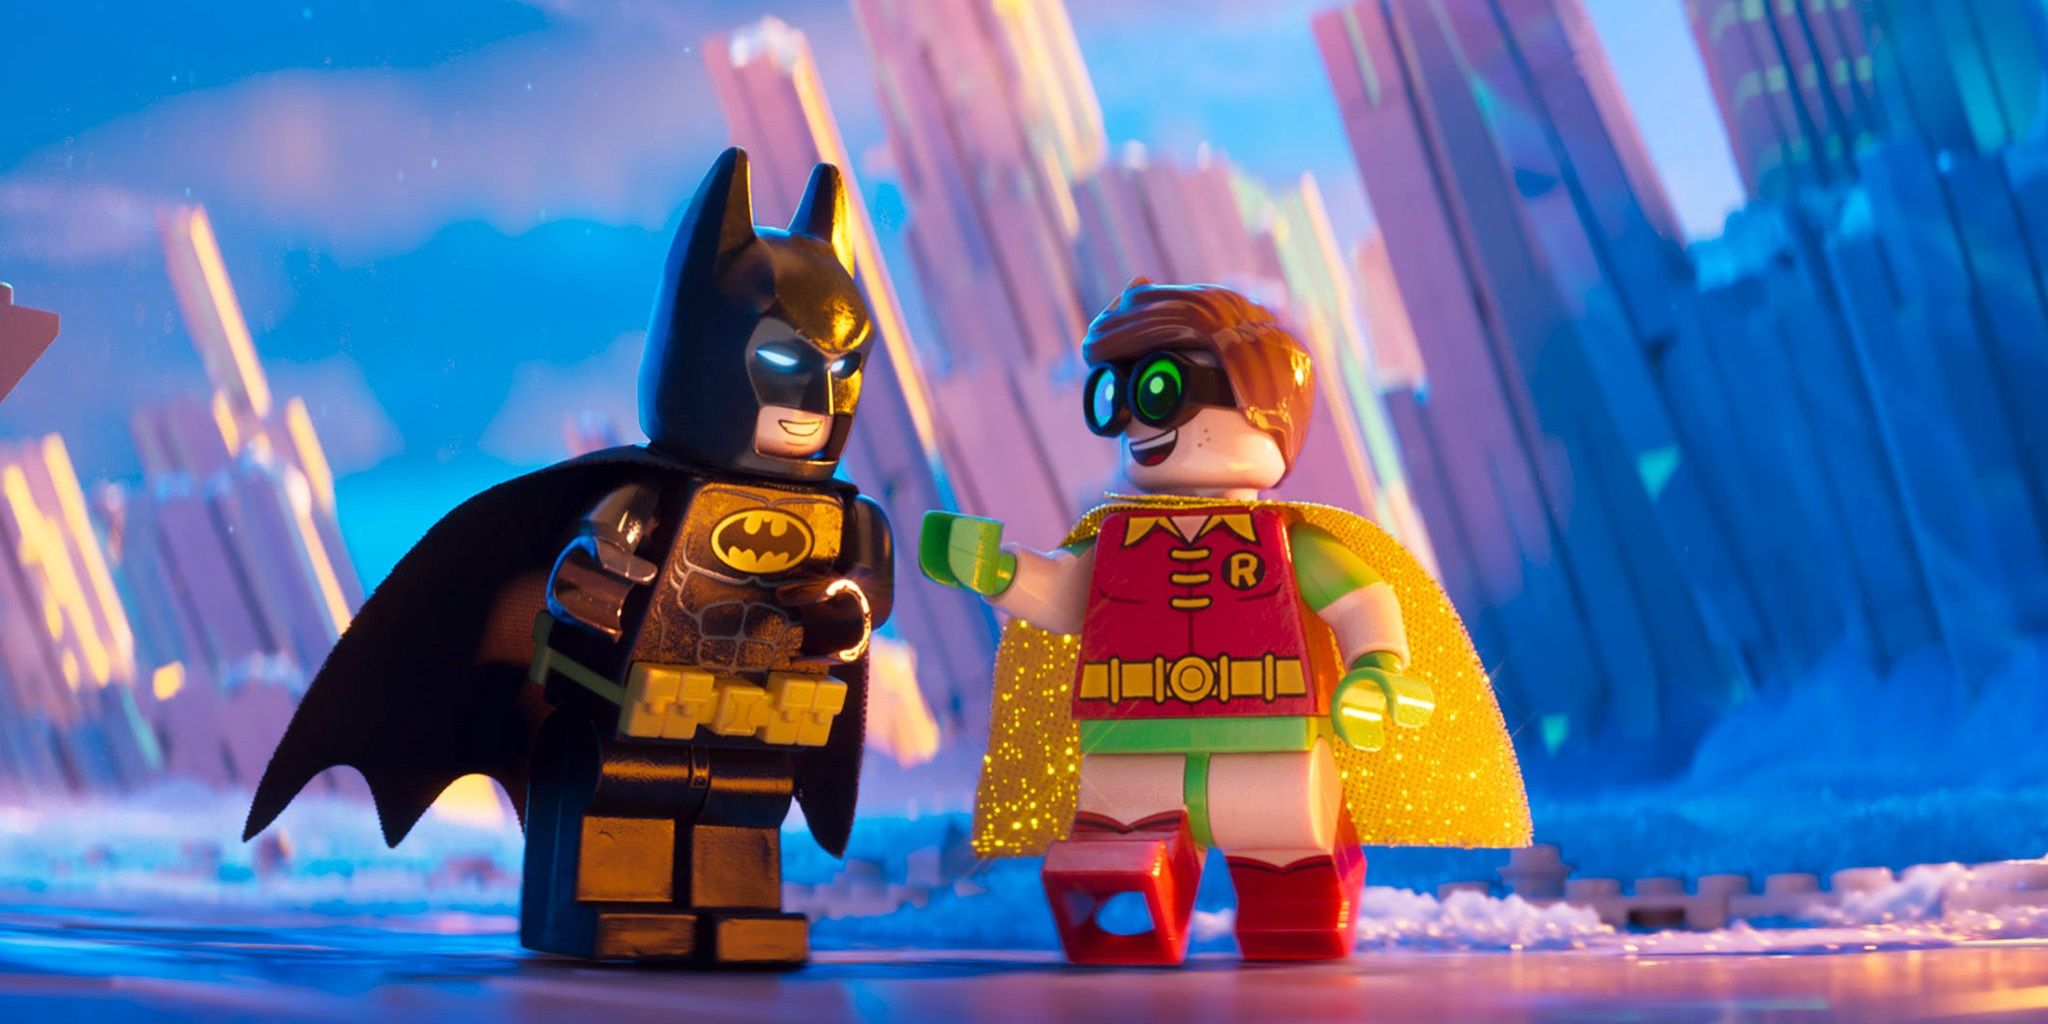 Batman and Robin in The Lego Batman Movie